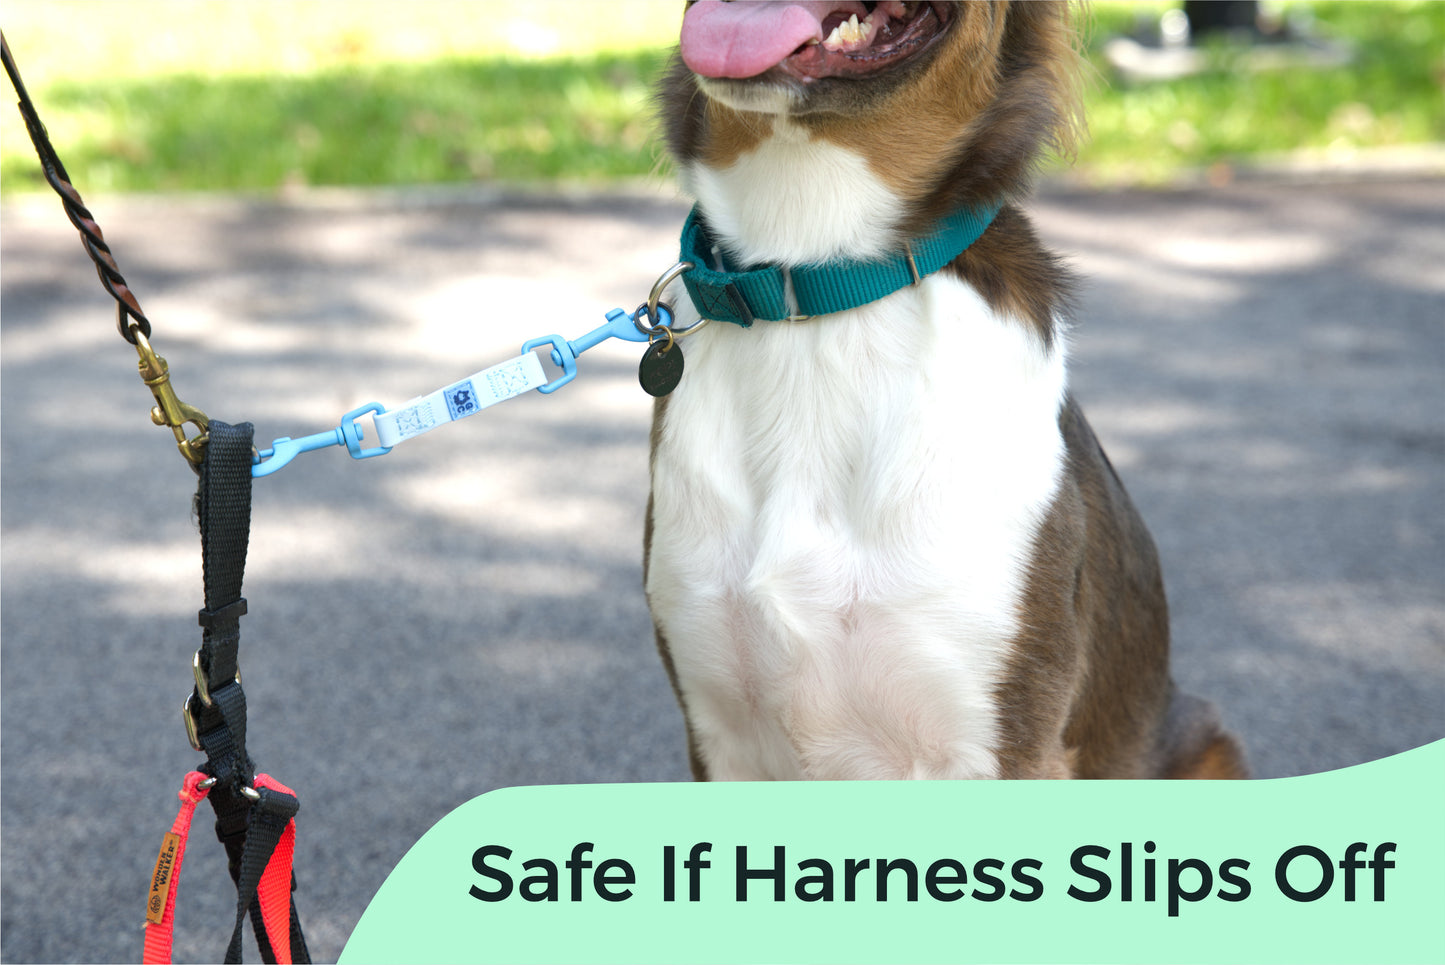 Safe if harness slips off